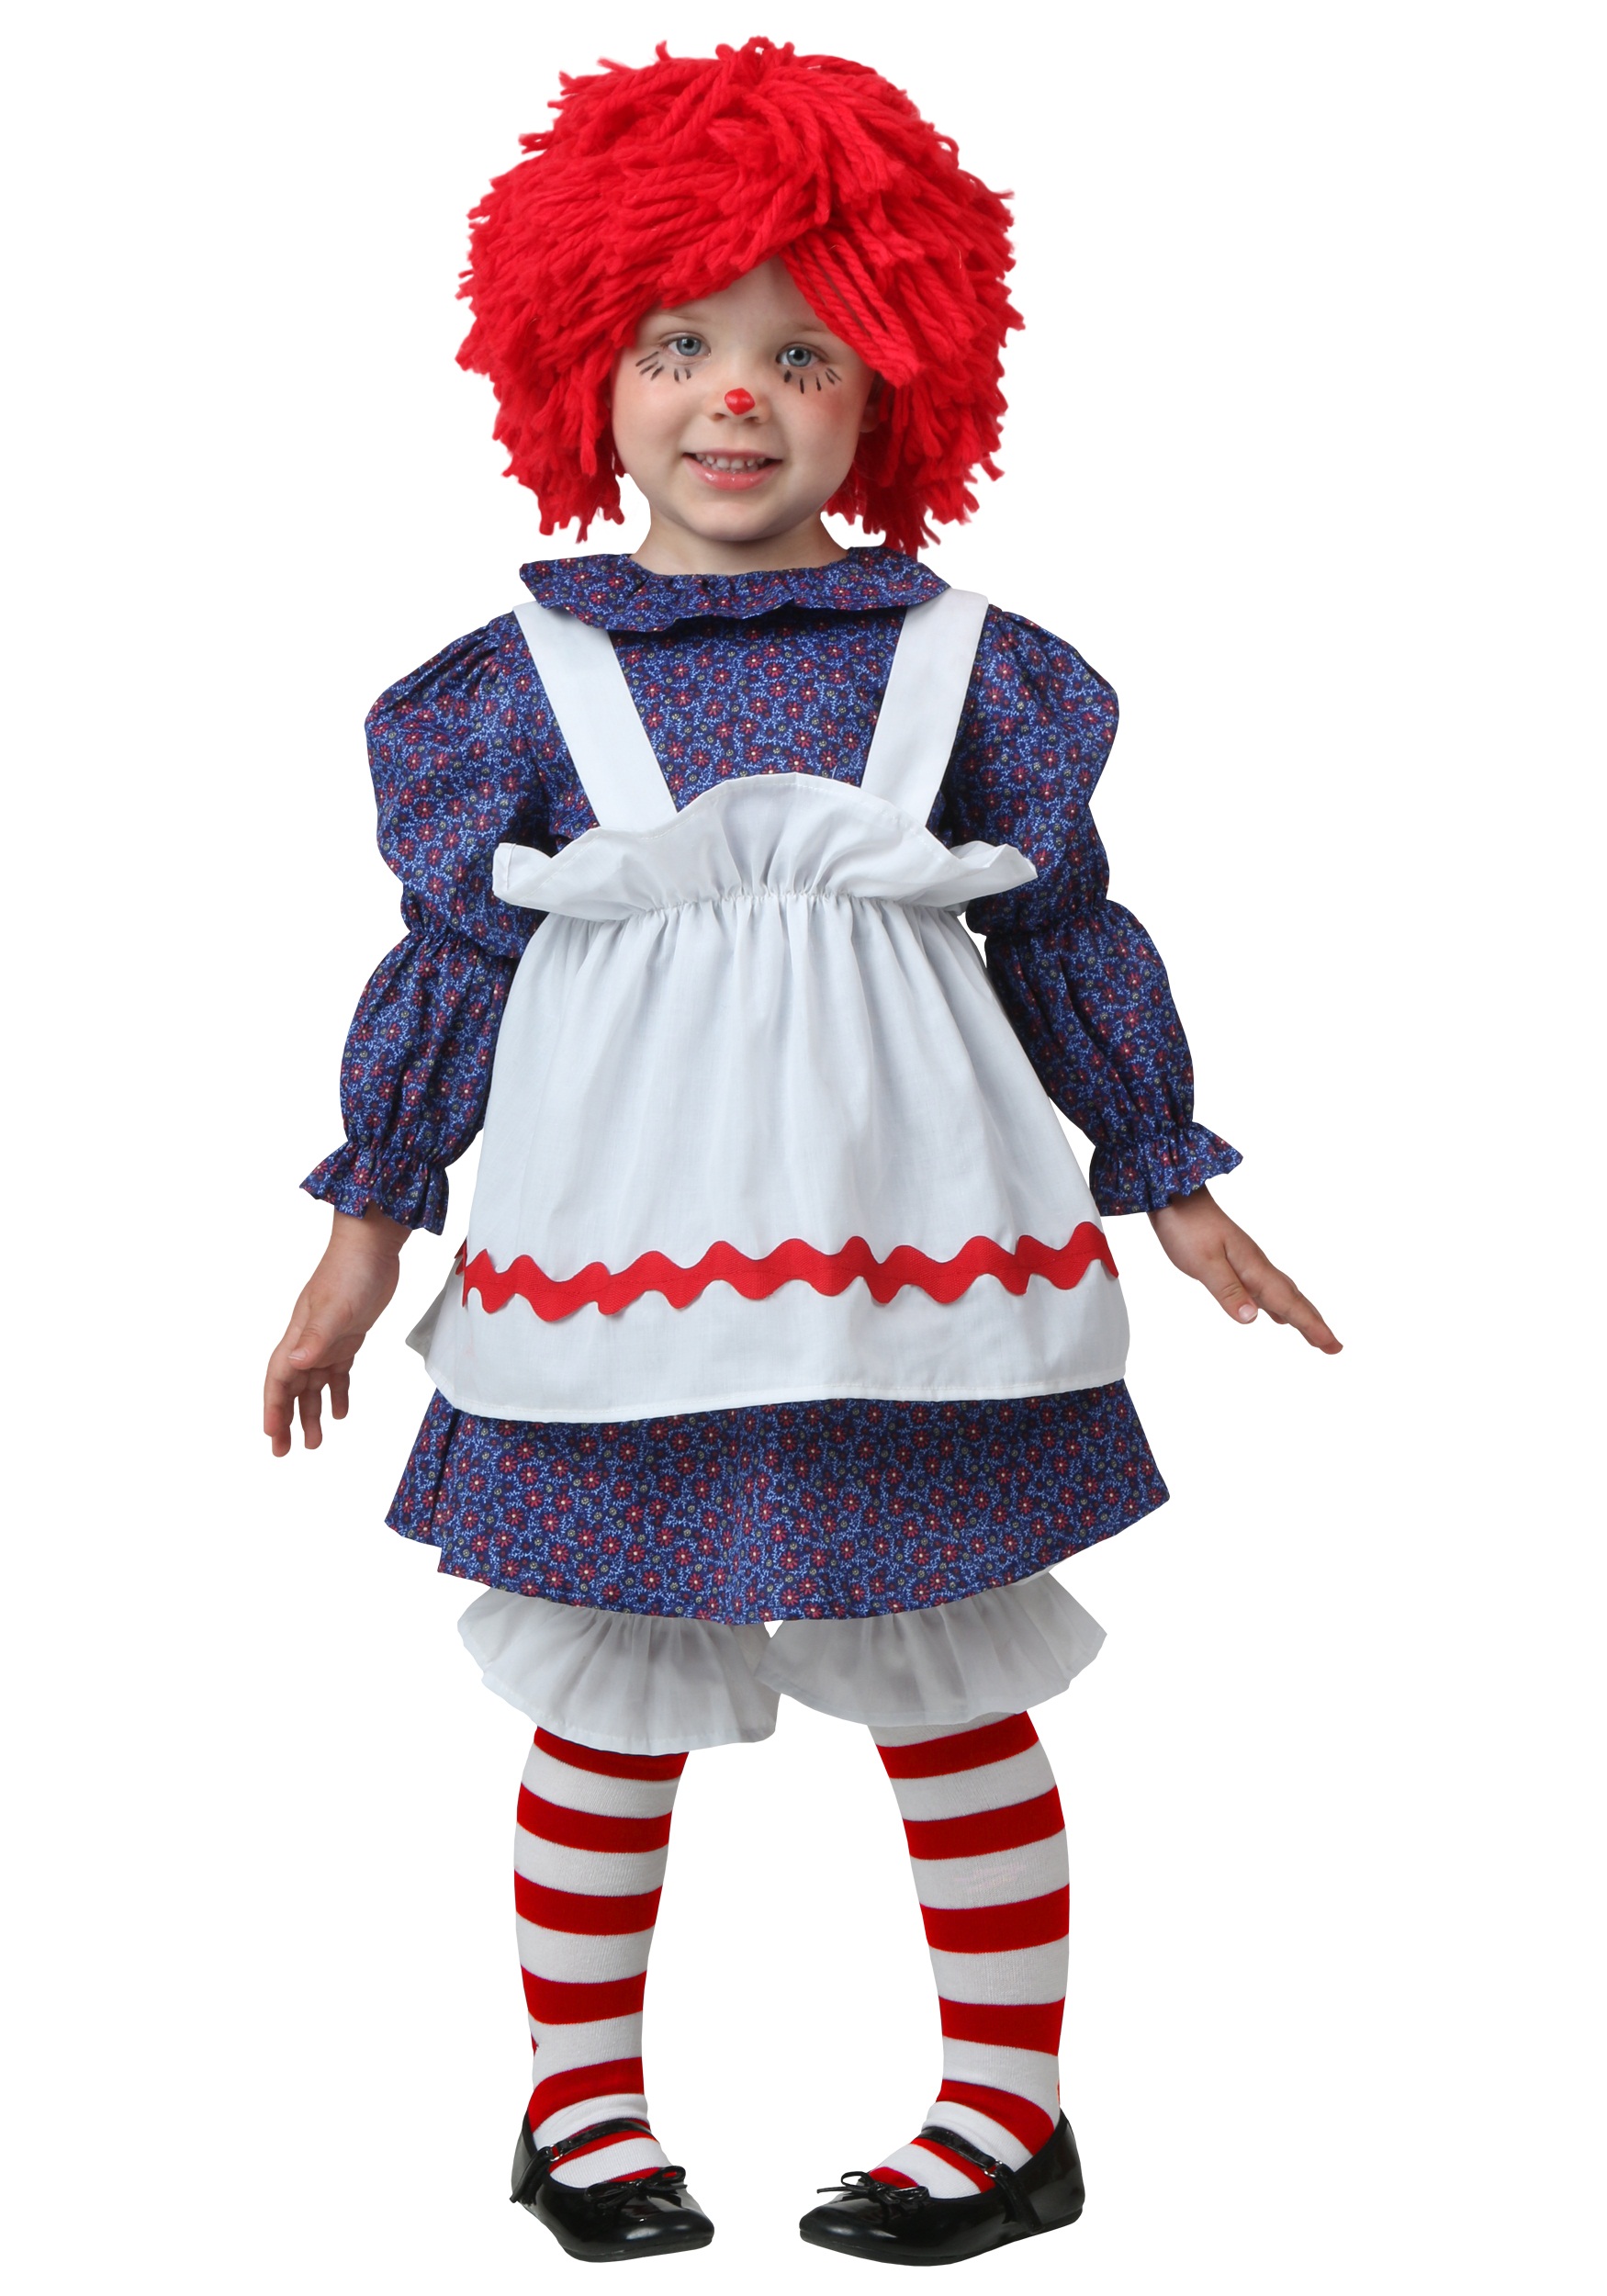 Creepy Rag Doll Costume